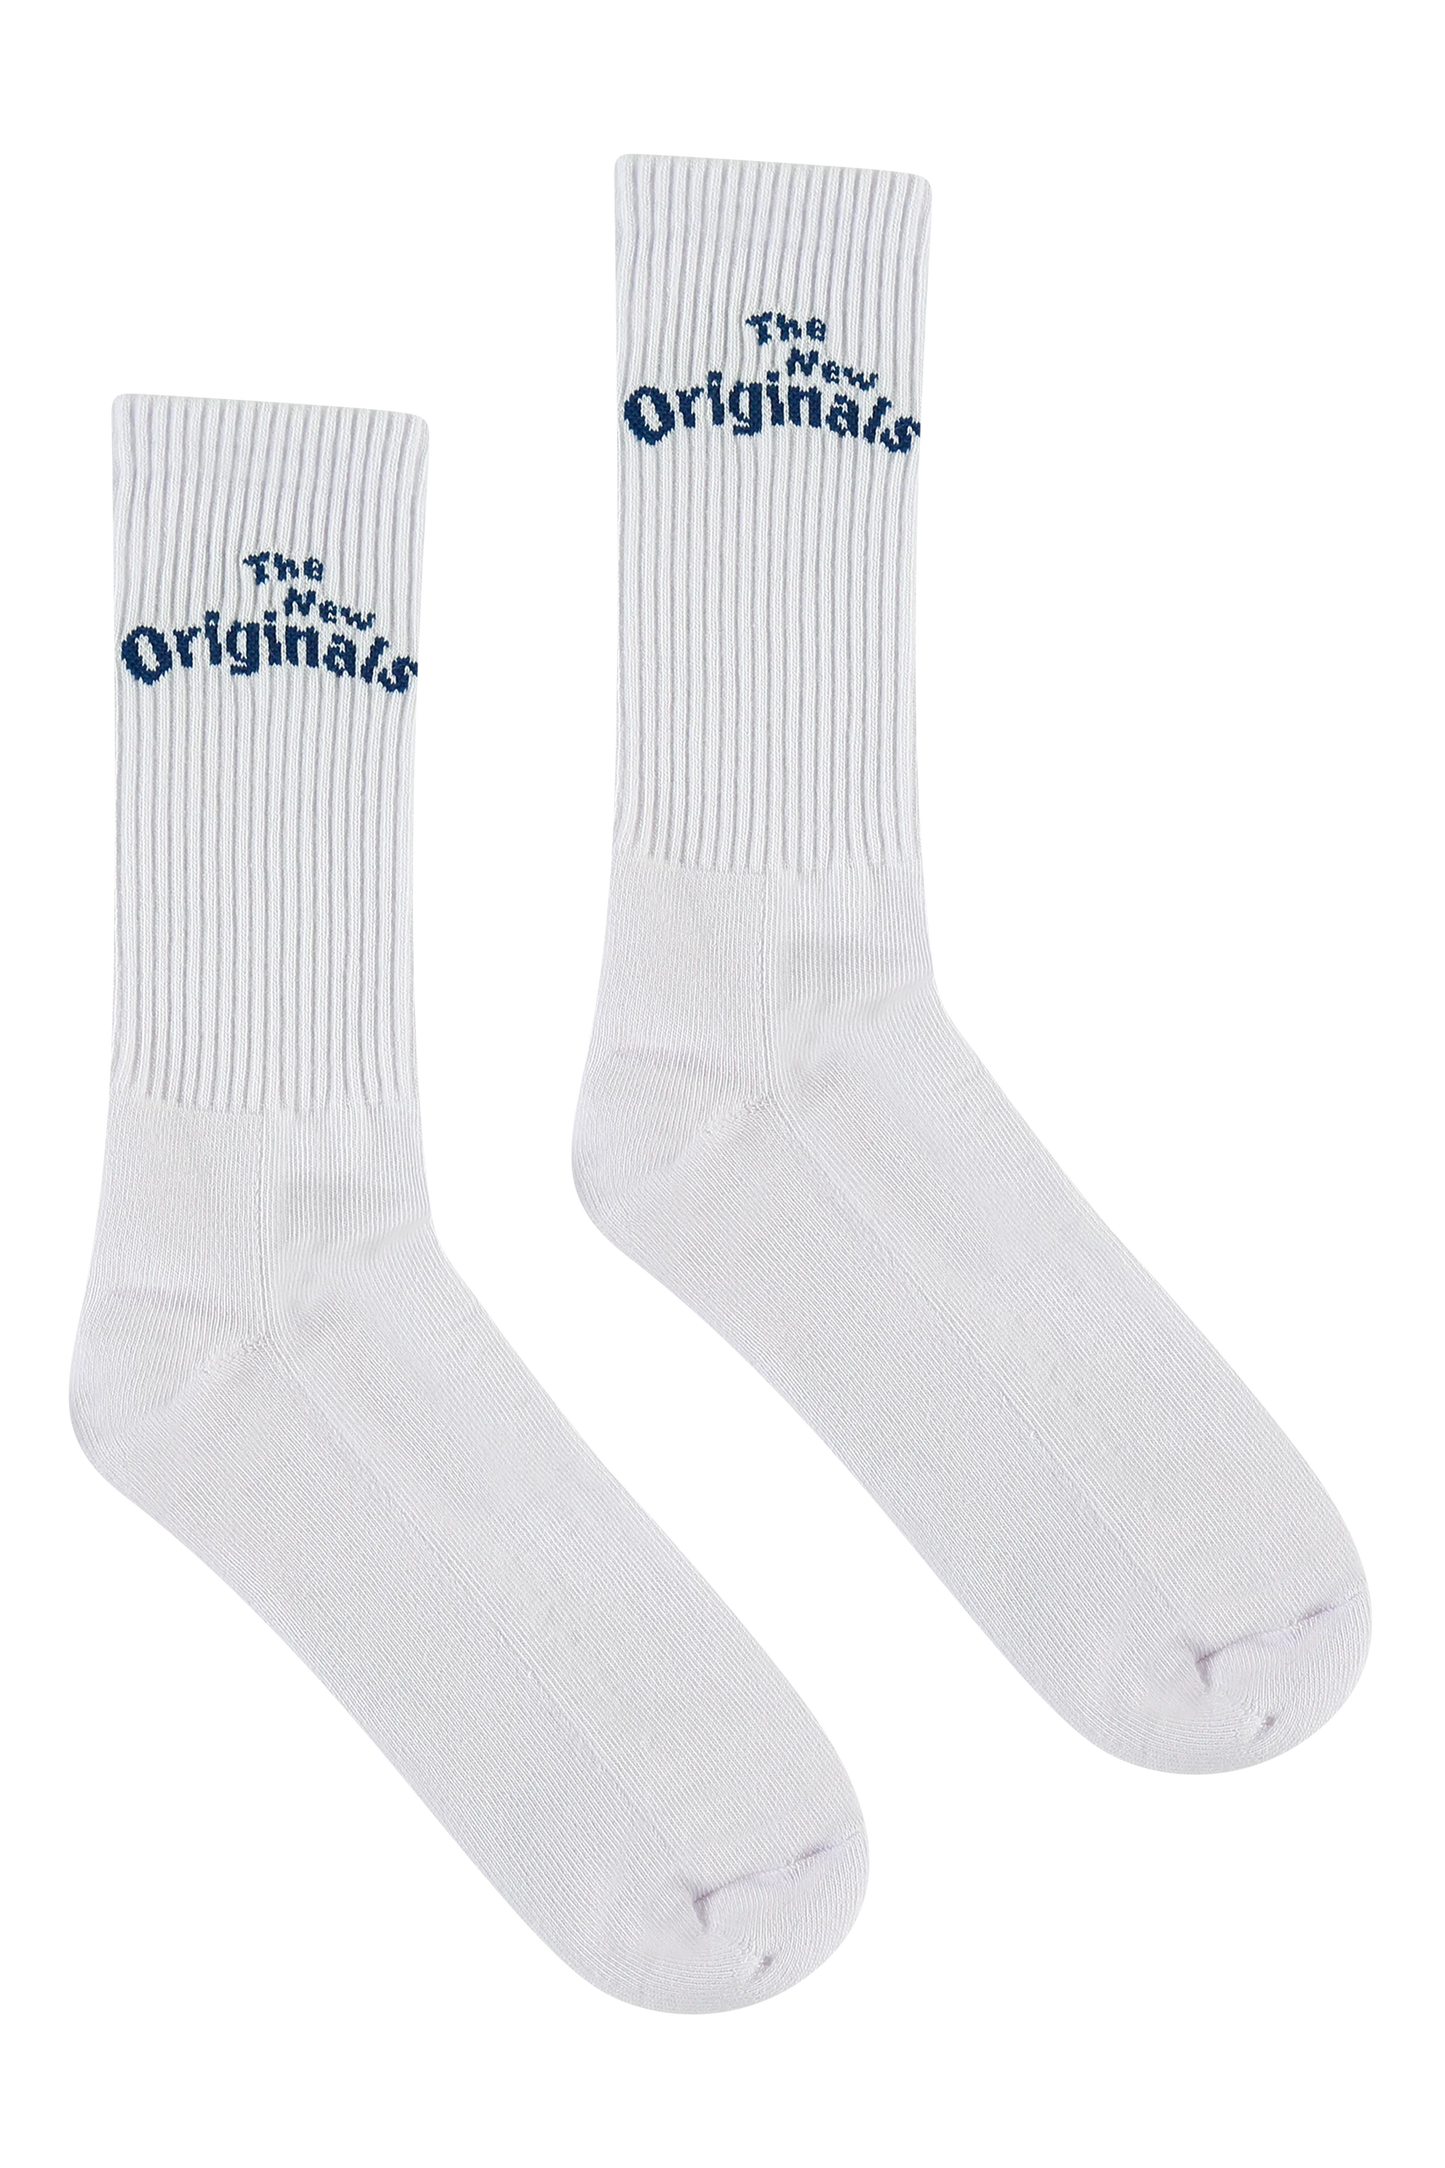 The New Originals Workman Socks - White/Navy